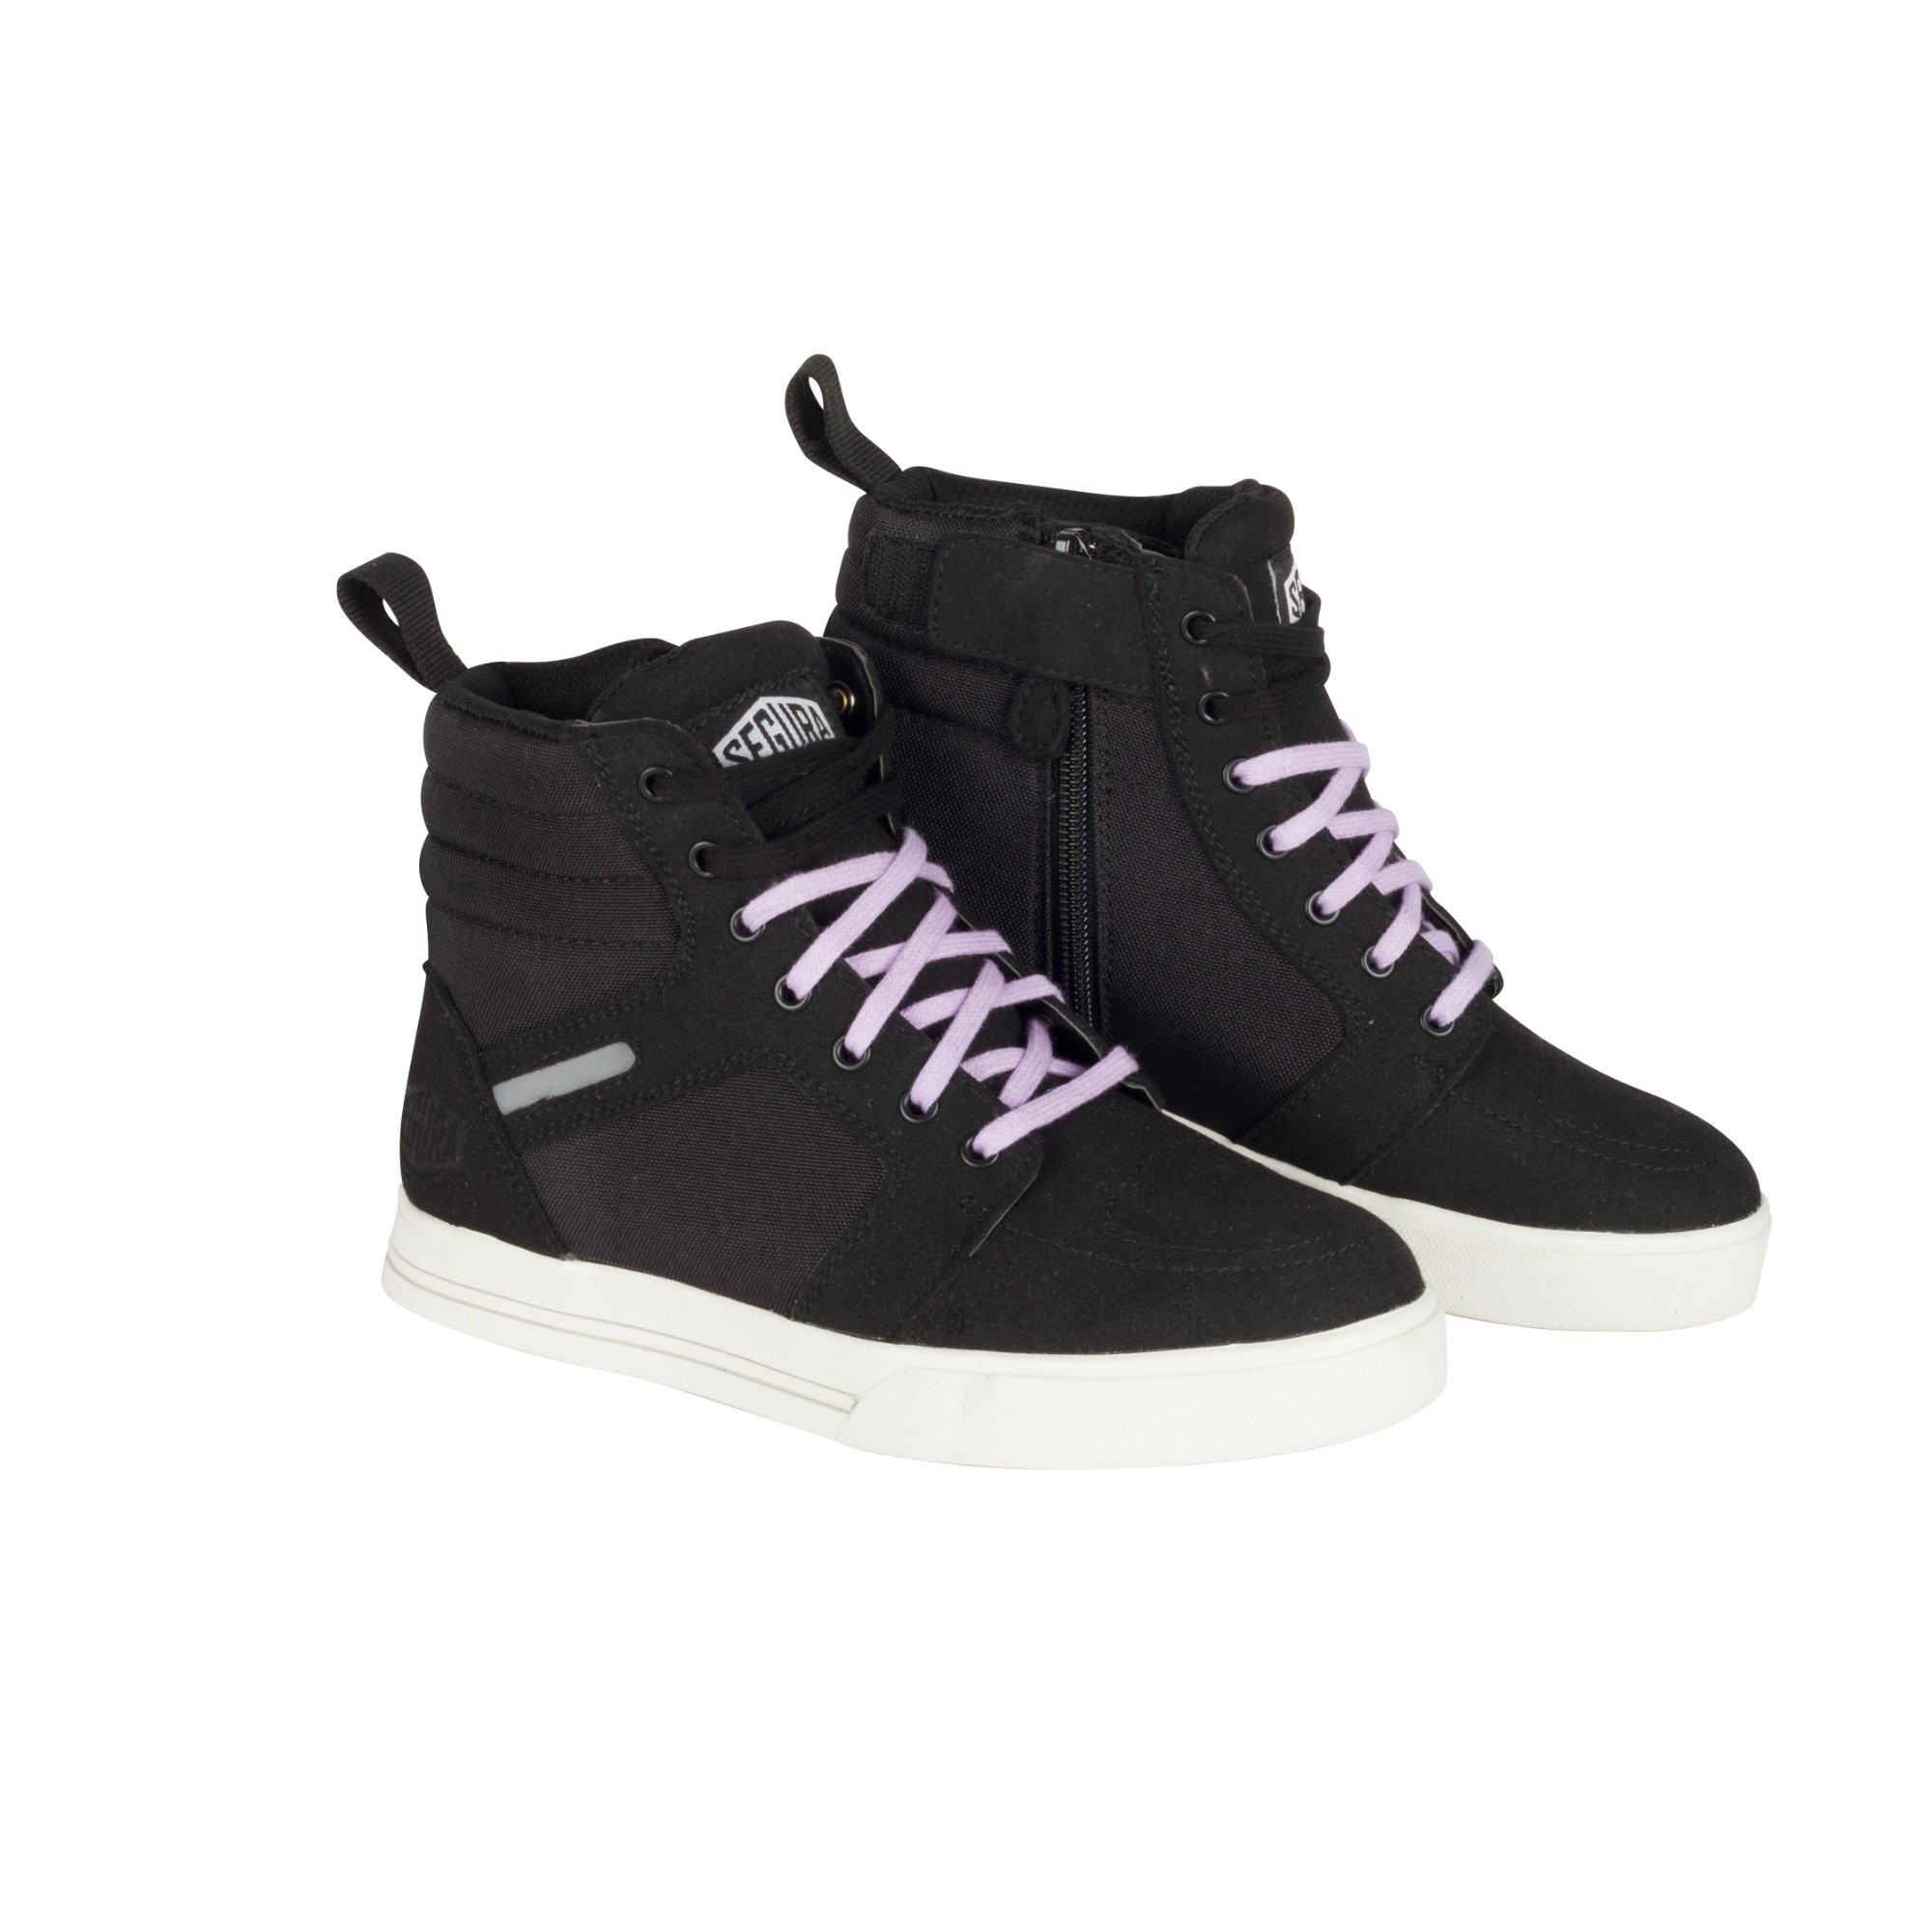 Image of Segura Lady Santana Sneakers Black Lilac Size 36 ID 3660815184141